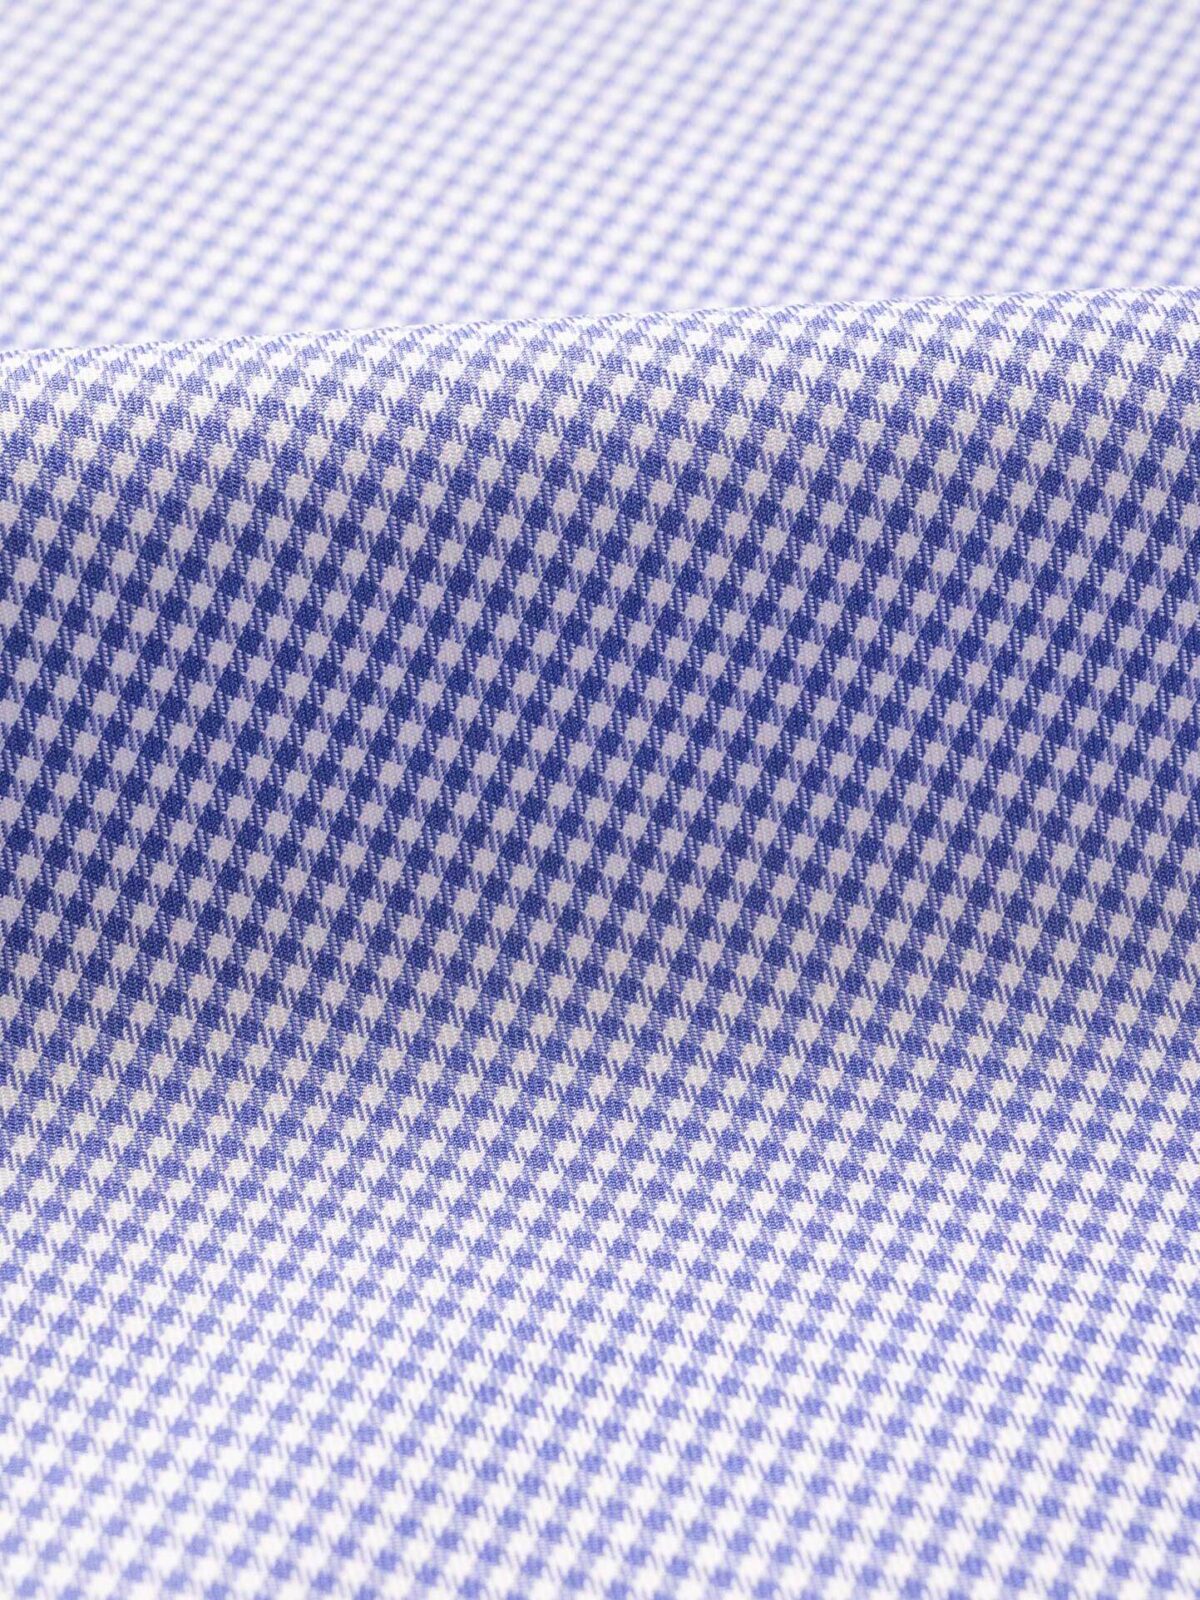 Light Blue Gingham Linen Shirts by Proper Cloth